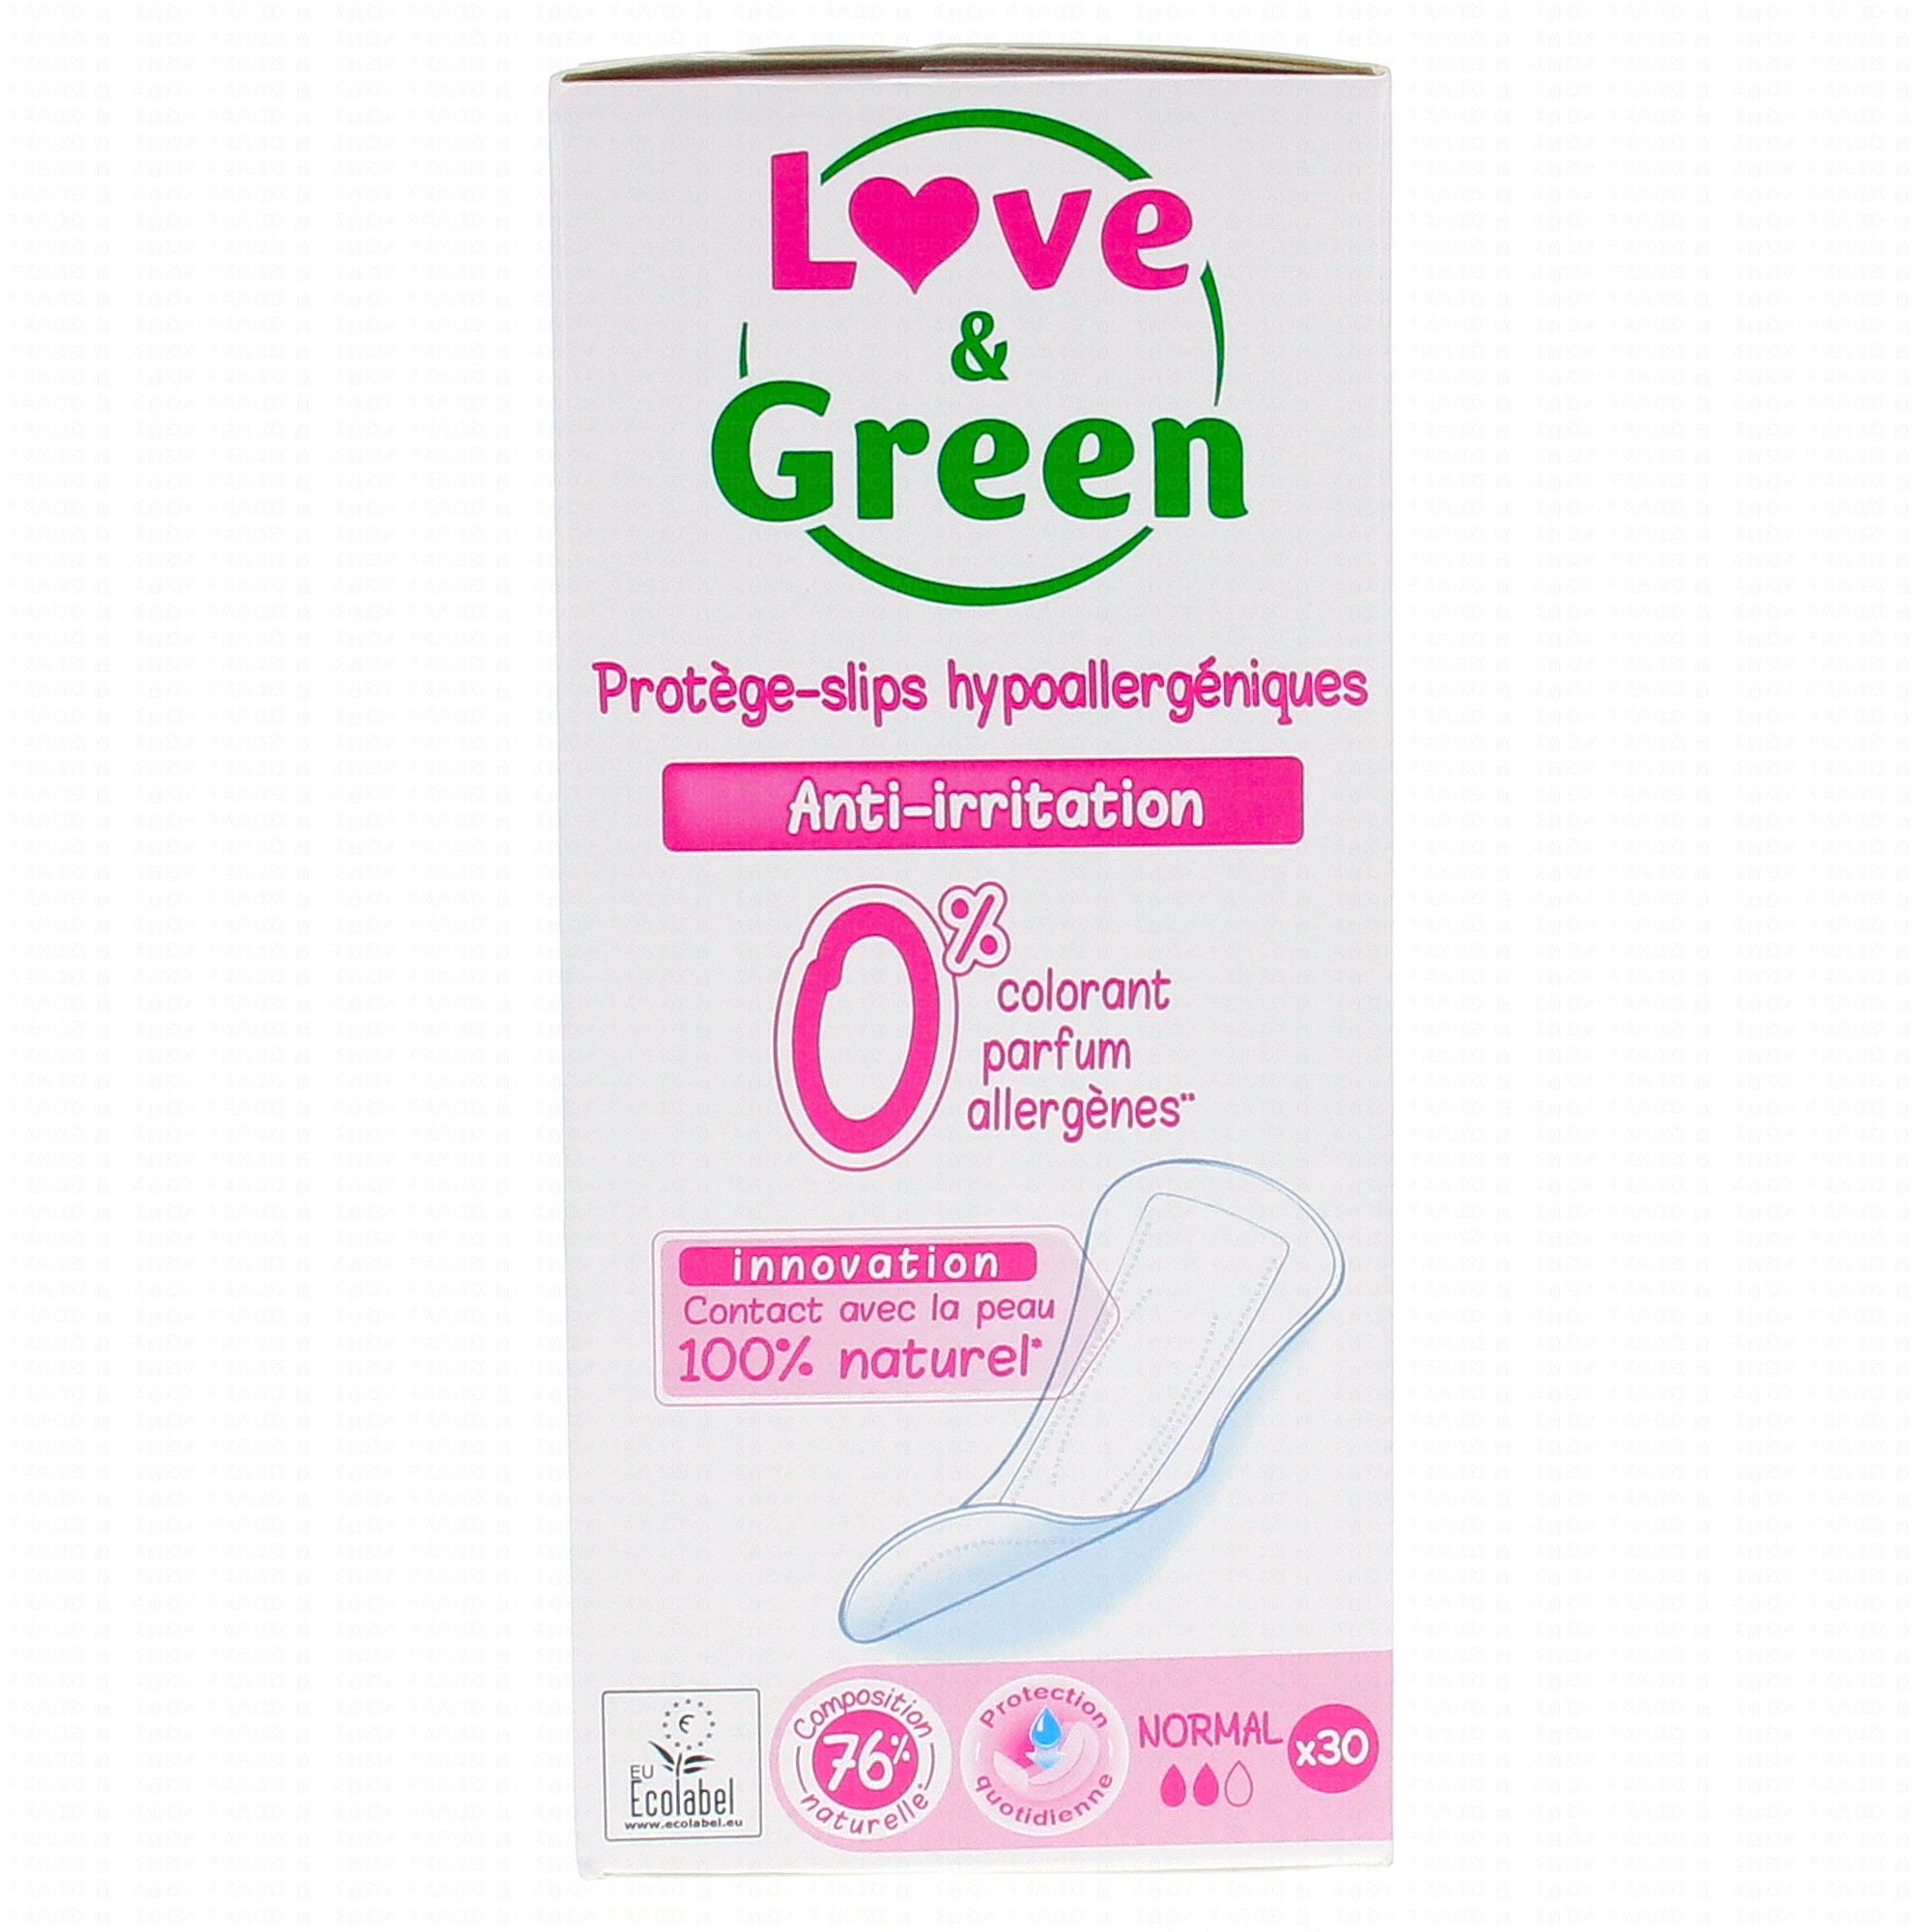 LOVE&GREEN Lingettes à l'eau x56 - Parapharmacie Prado Mermoz